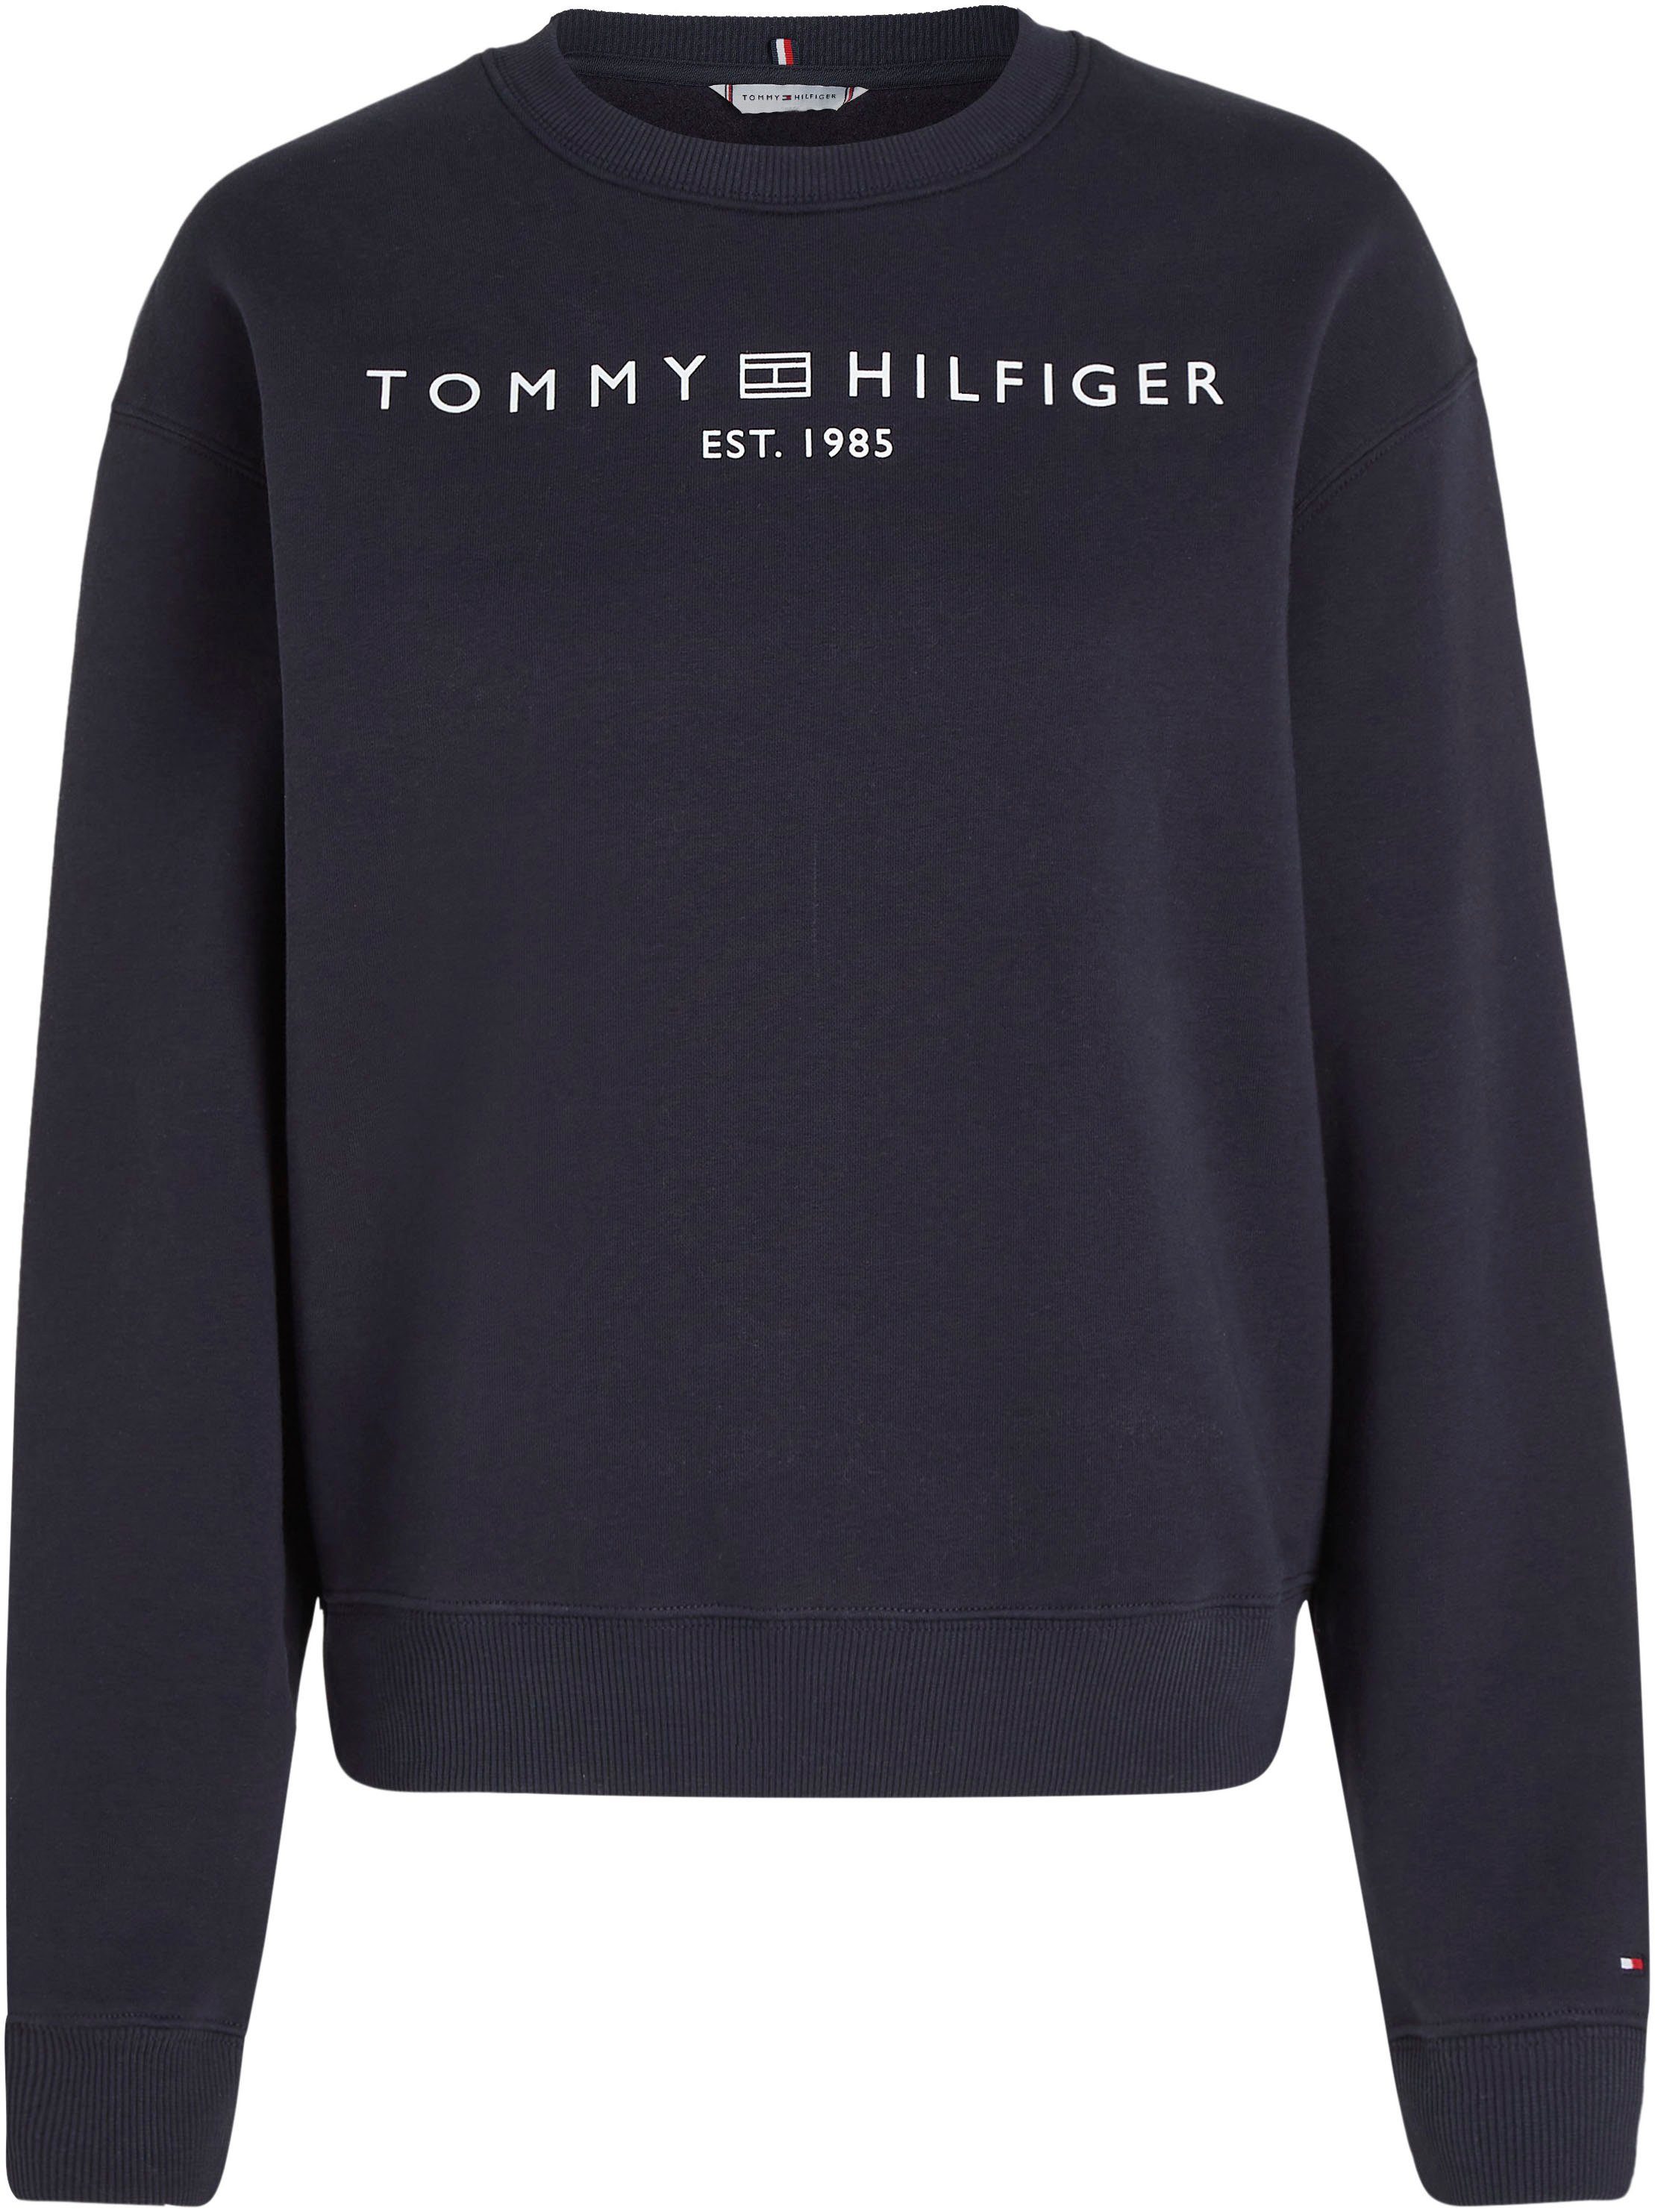 Tommy Hilfiger REG Sky Logoschriftzug SWTSHRT mit CORP LOGO Sweatshirt Desert MDRN C-NK